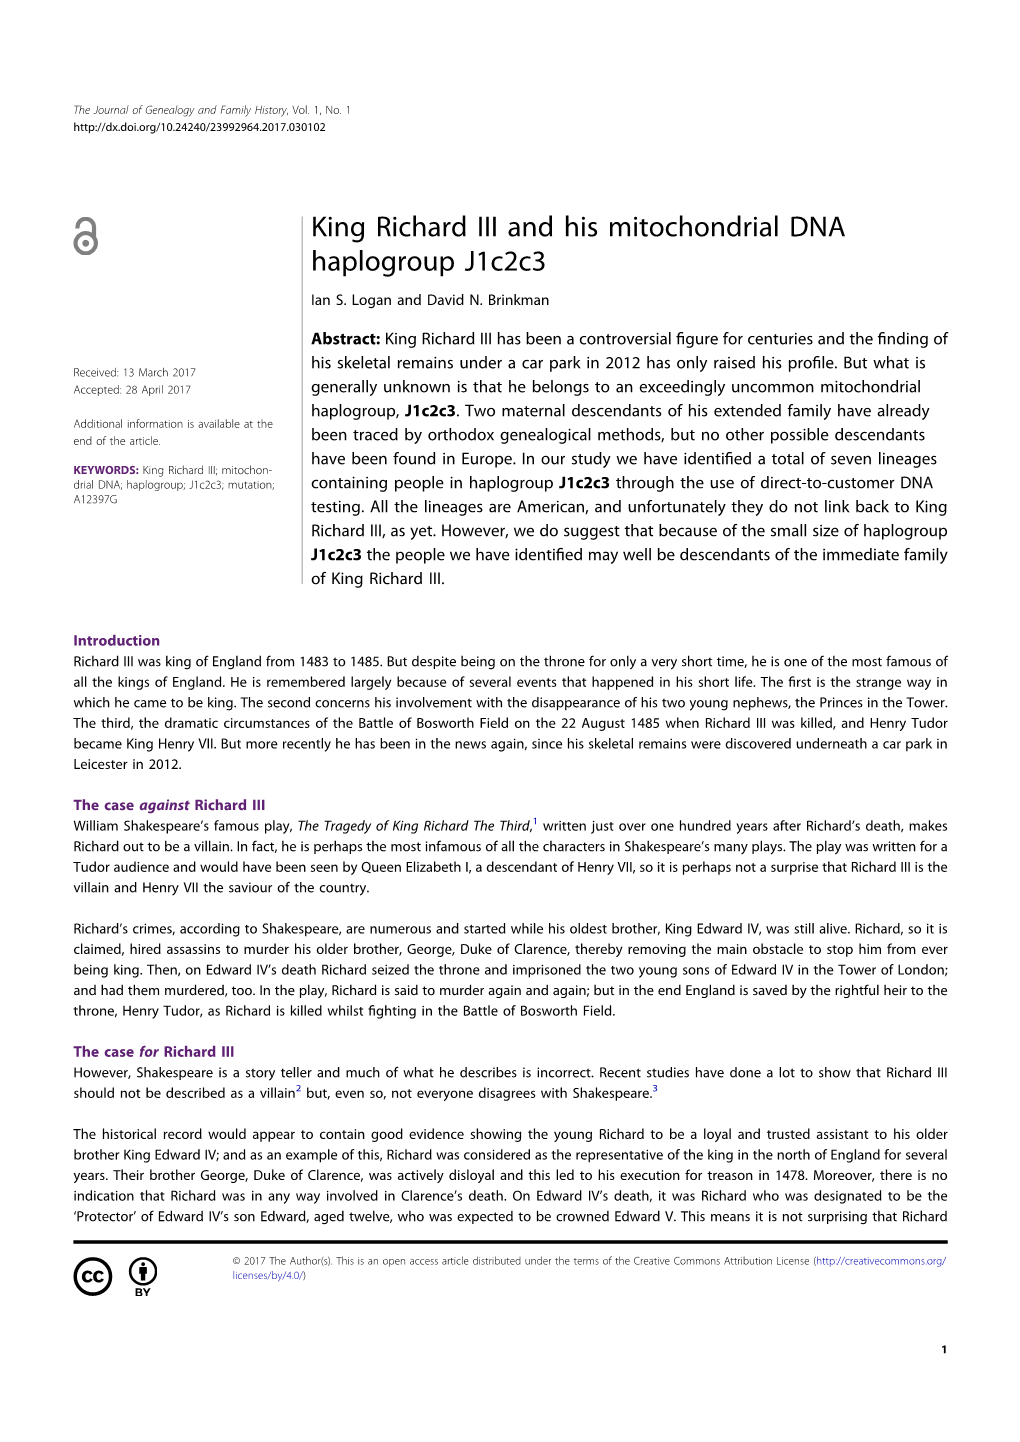 King Richard III and His Mitochondrial DNA Haplogroup J1c2c3